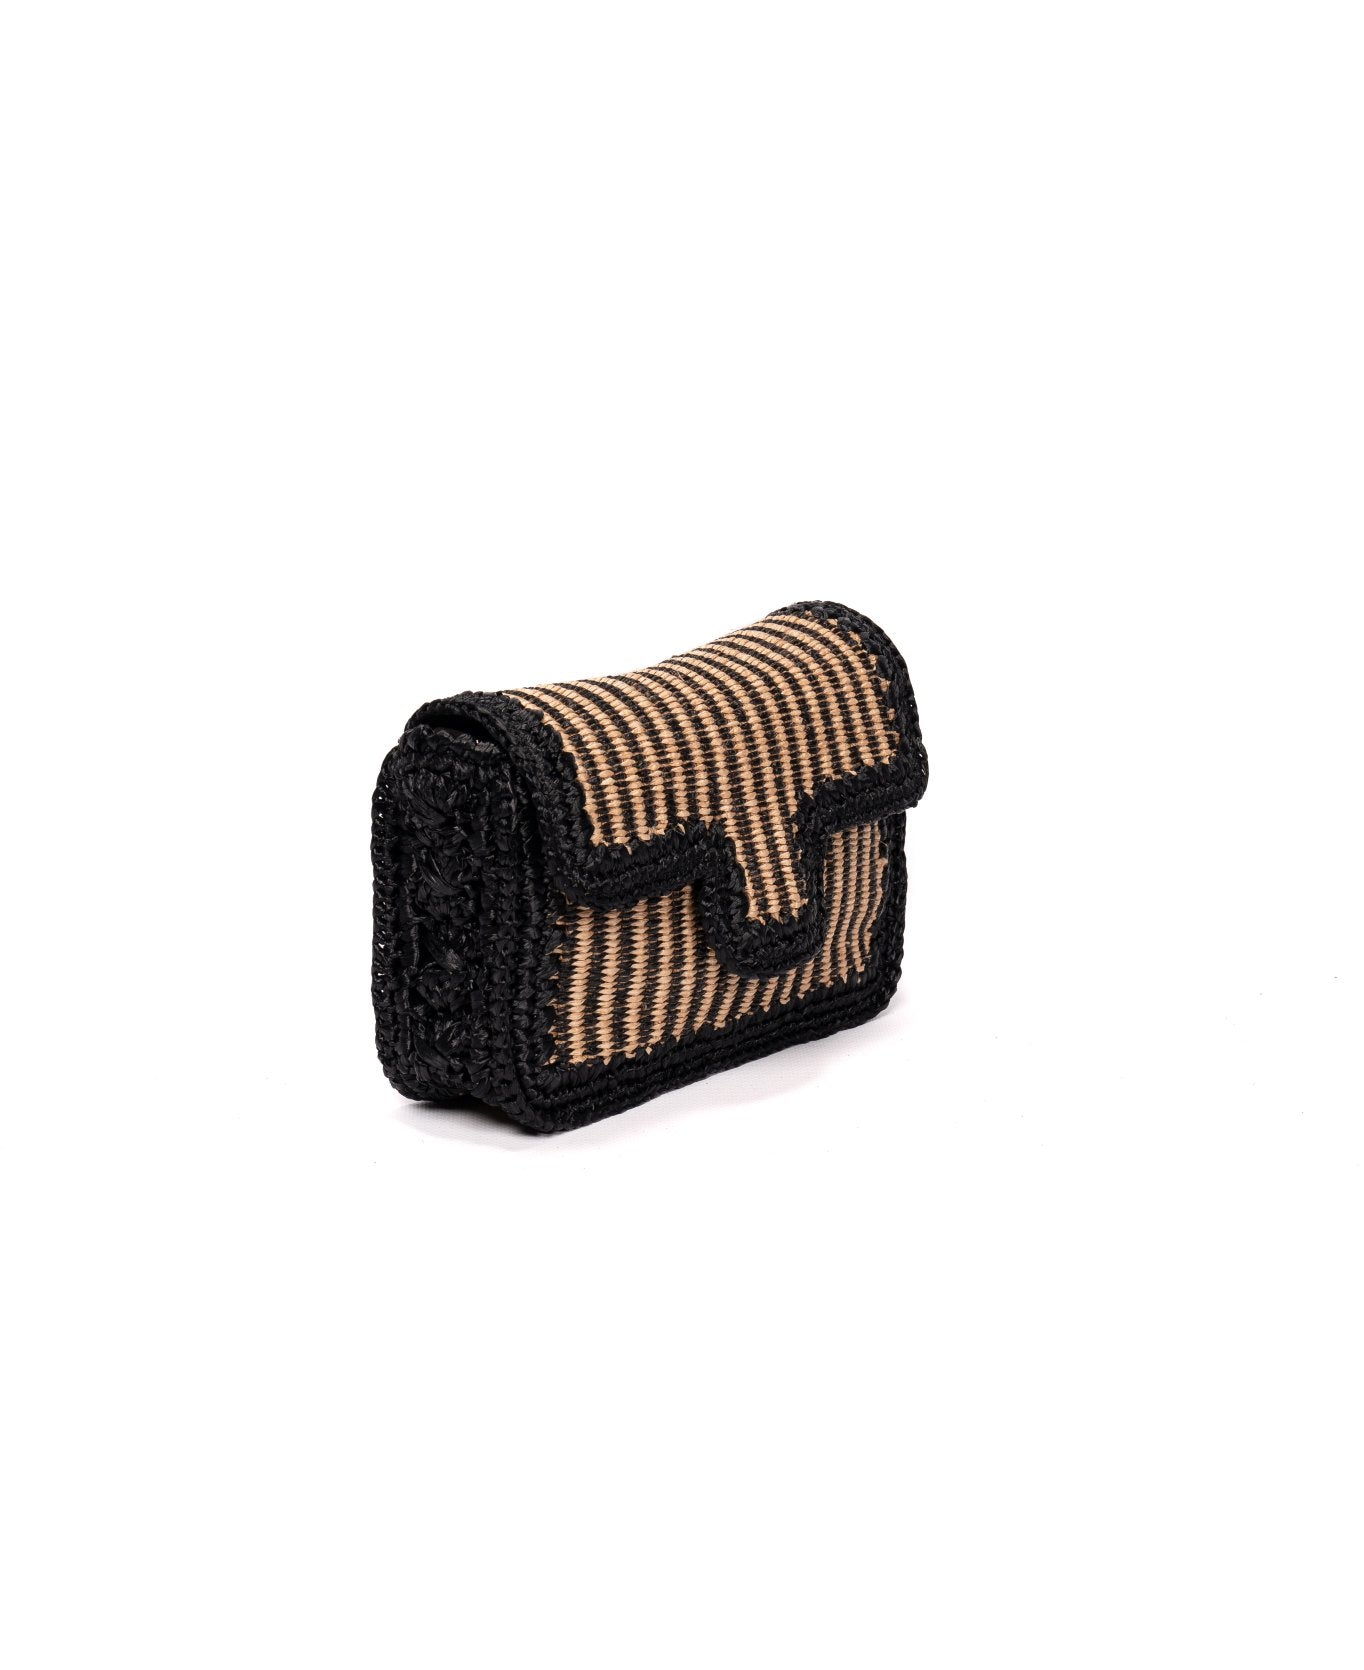 black and natural raffia bag, Ginevra clutch bag, handmade raffia bag, crochet stripe bag, Florence fashion accessory